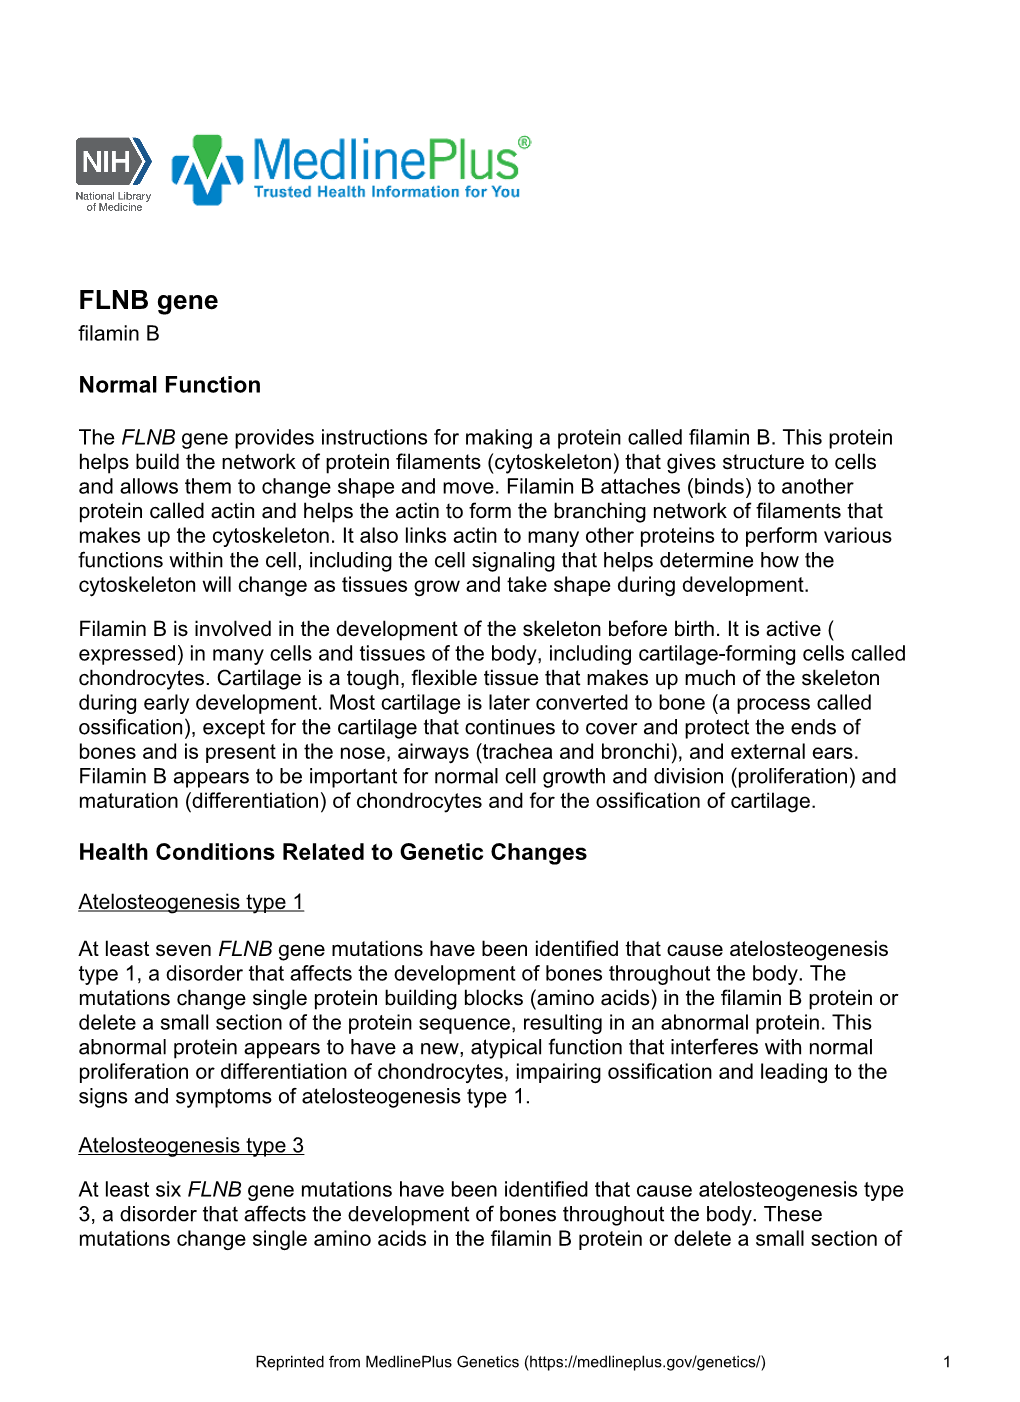 FLNB Gene Filamin B